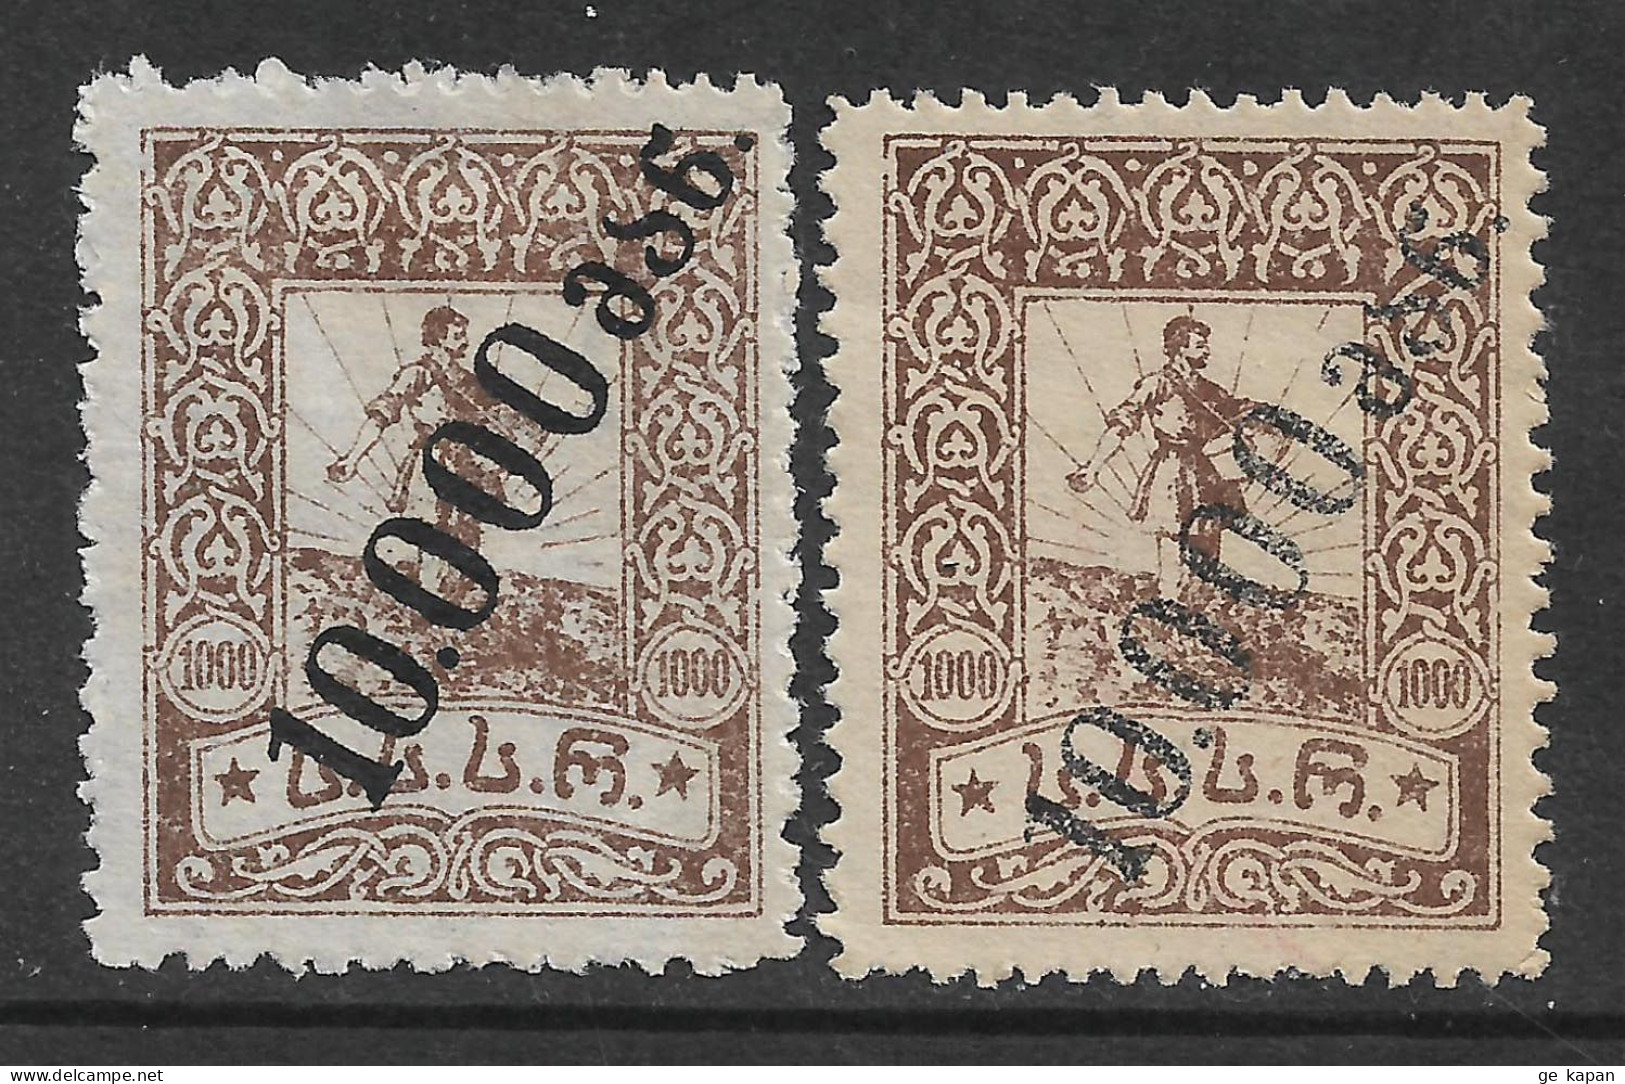 1923 GEORGIA SET OF 2 MLH STAMPS (Michel # 53A) CV €12.00 - Georgia